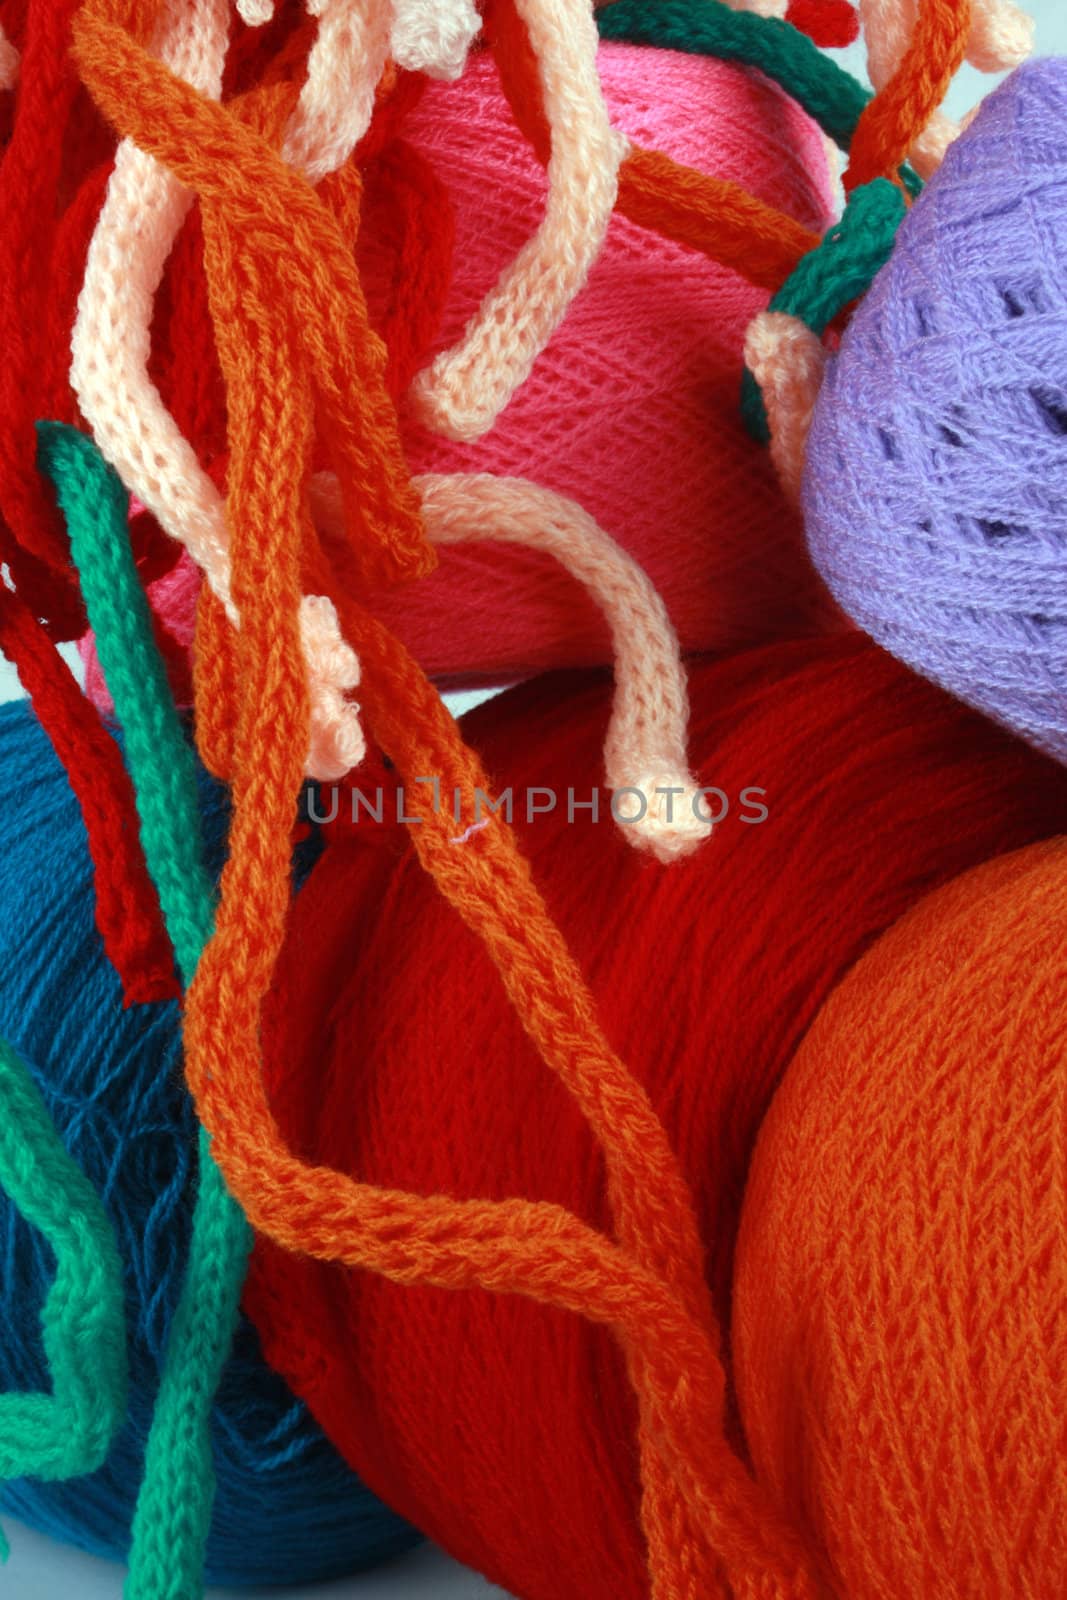 Colorful full woolen balls and threads randomly kept.